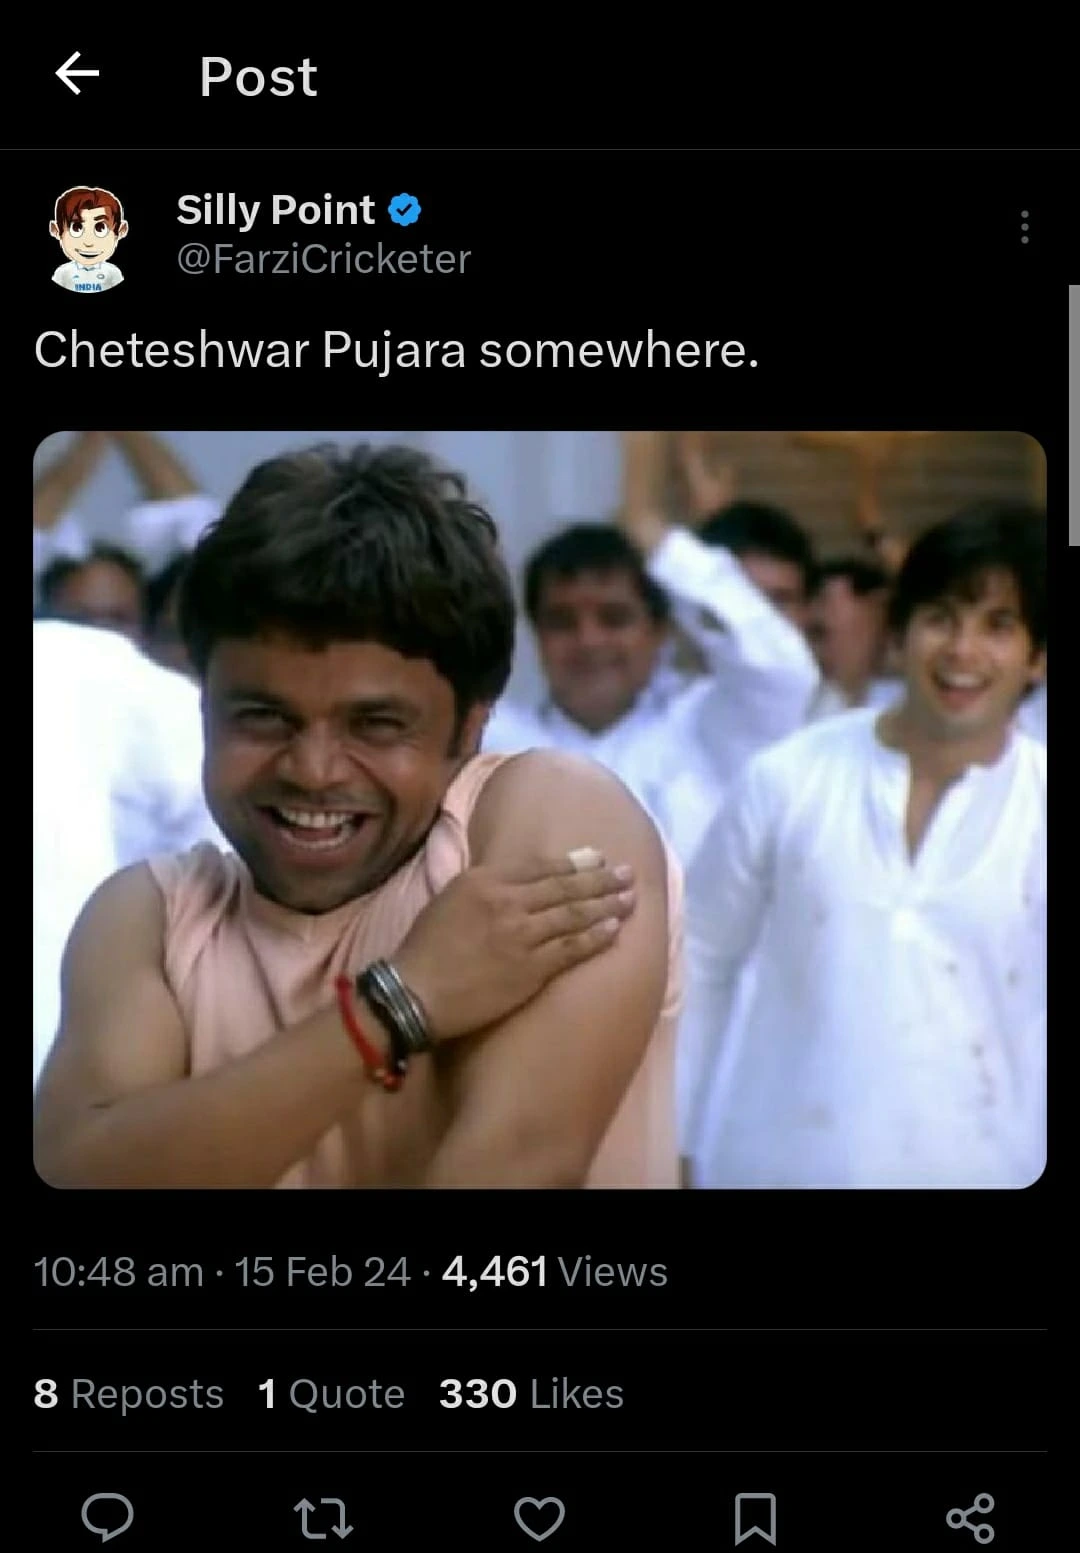 Cheteshwar Pujara